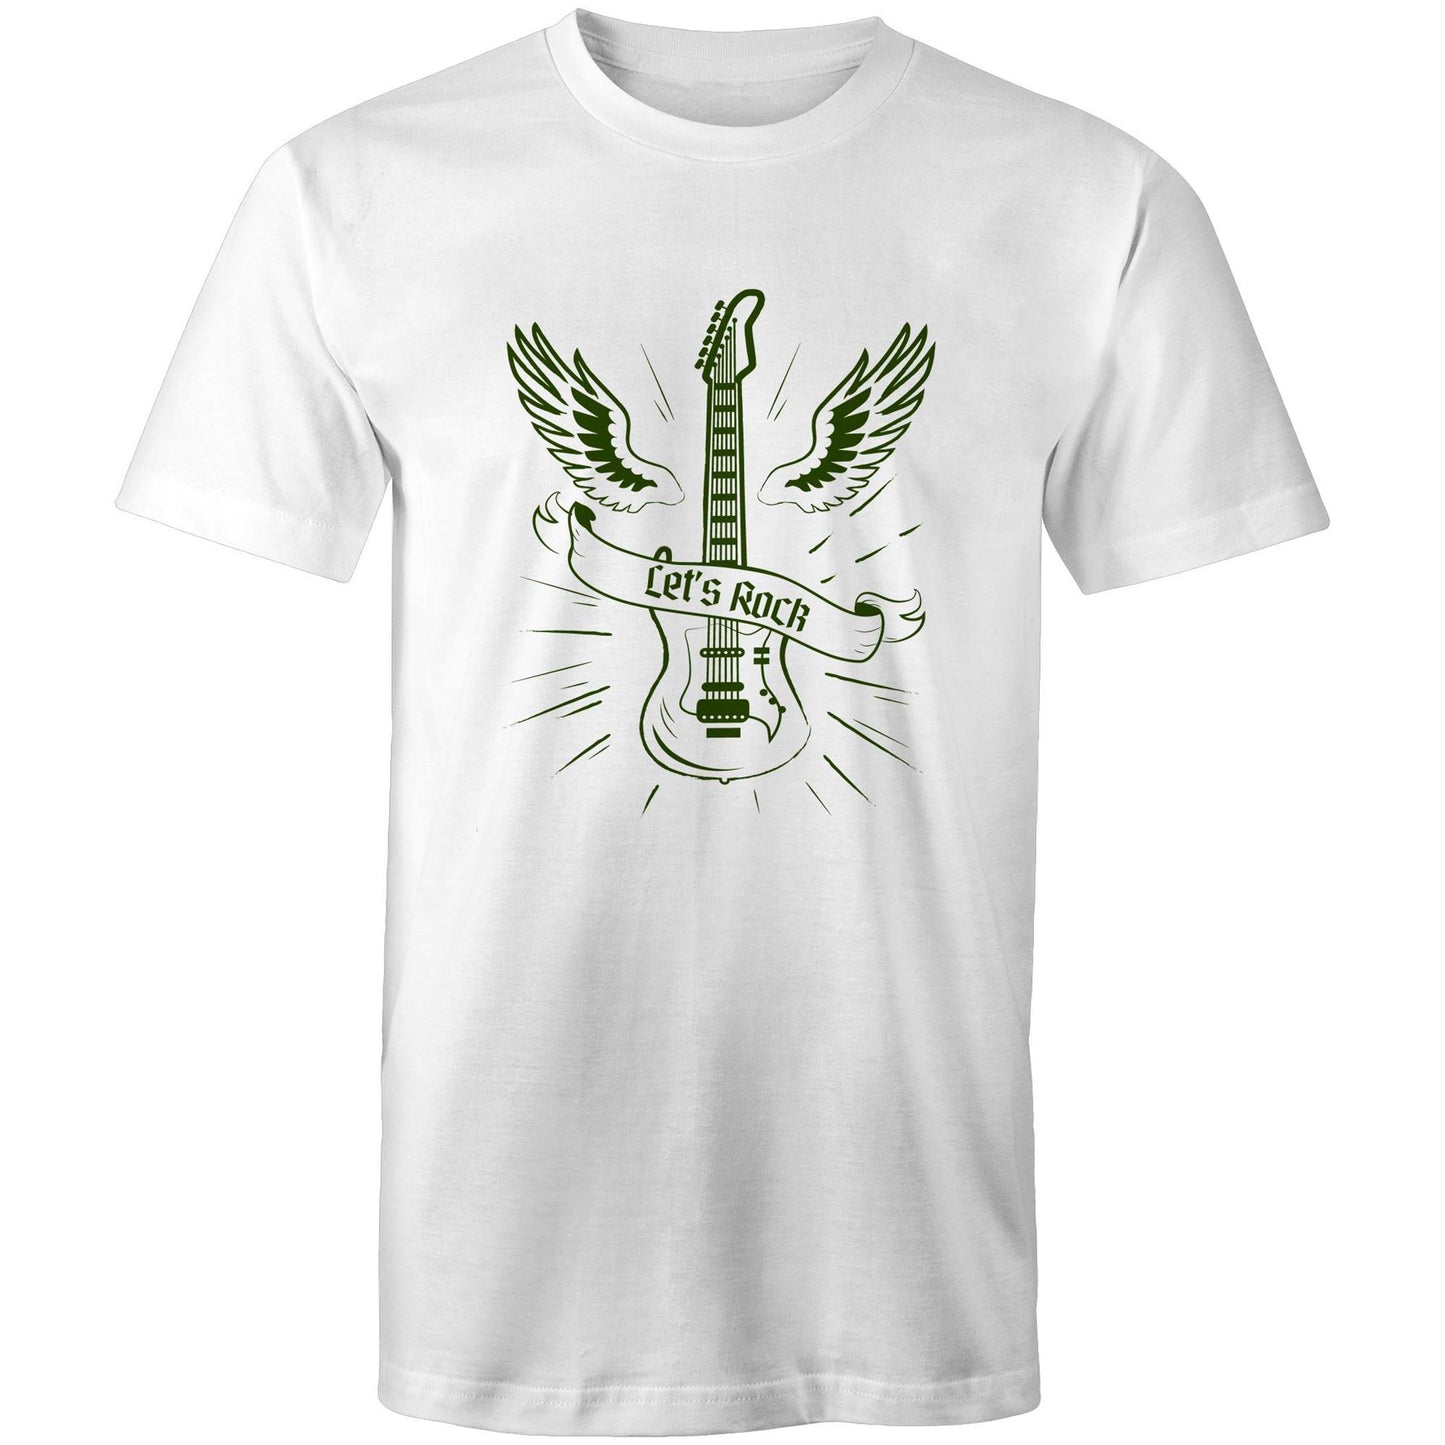 Let's Rock - Mens T-Shirt White Mens T-shirt Music